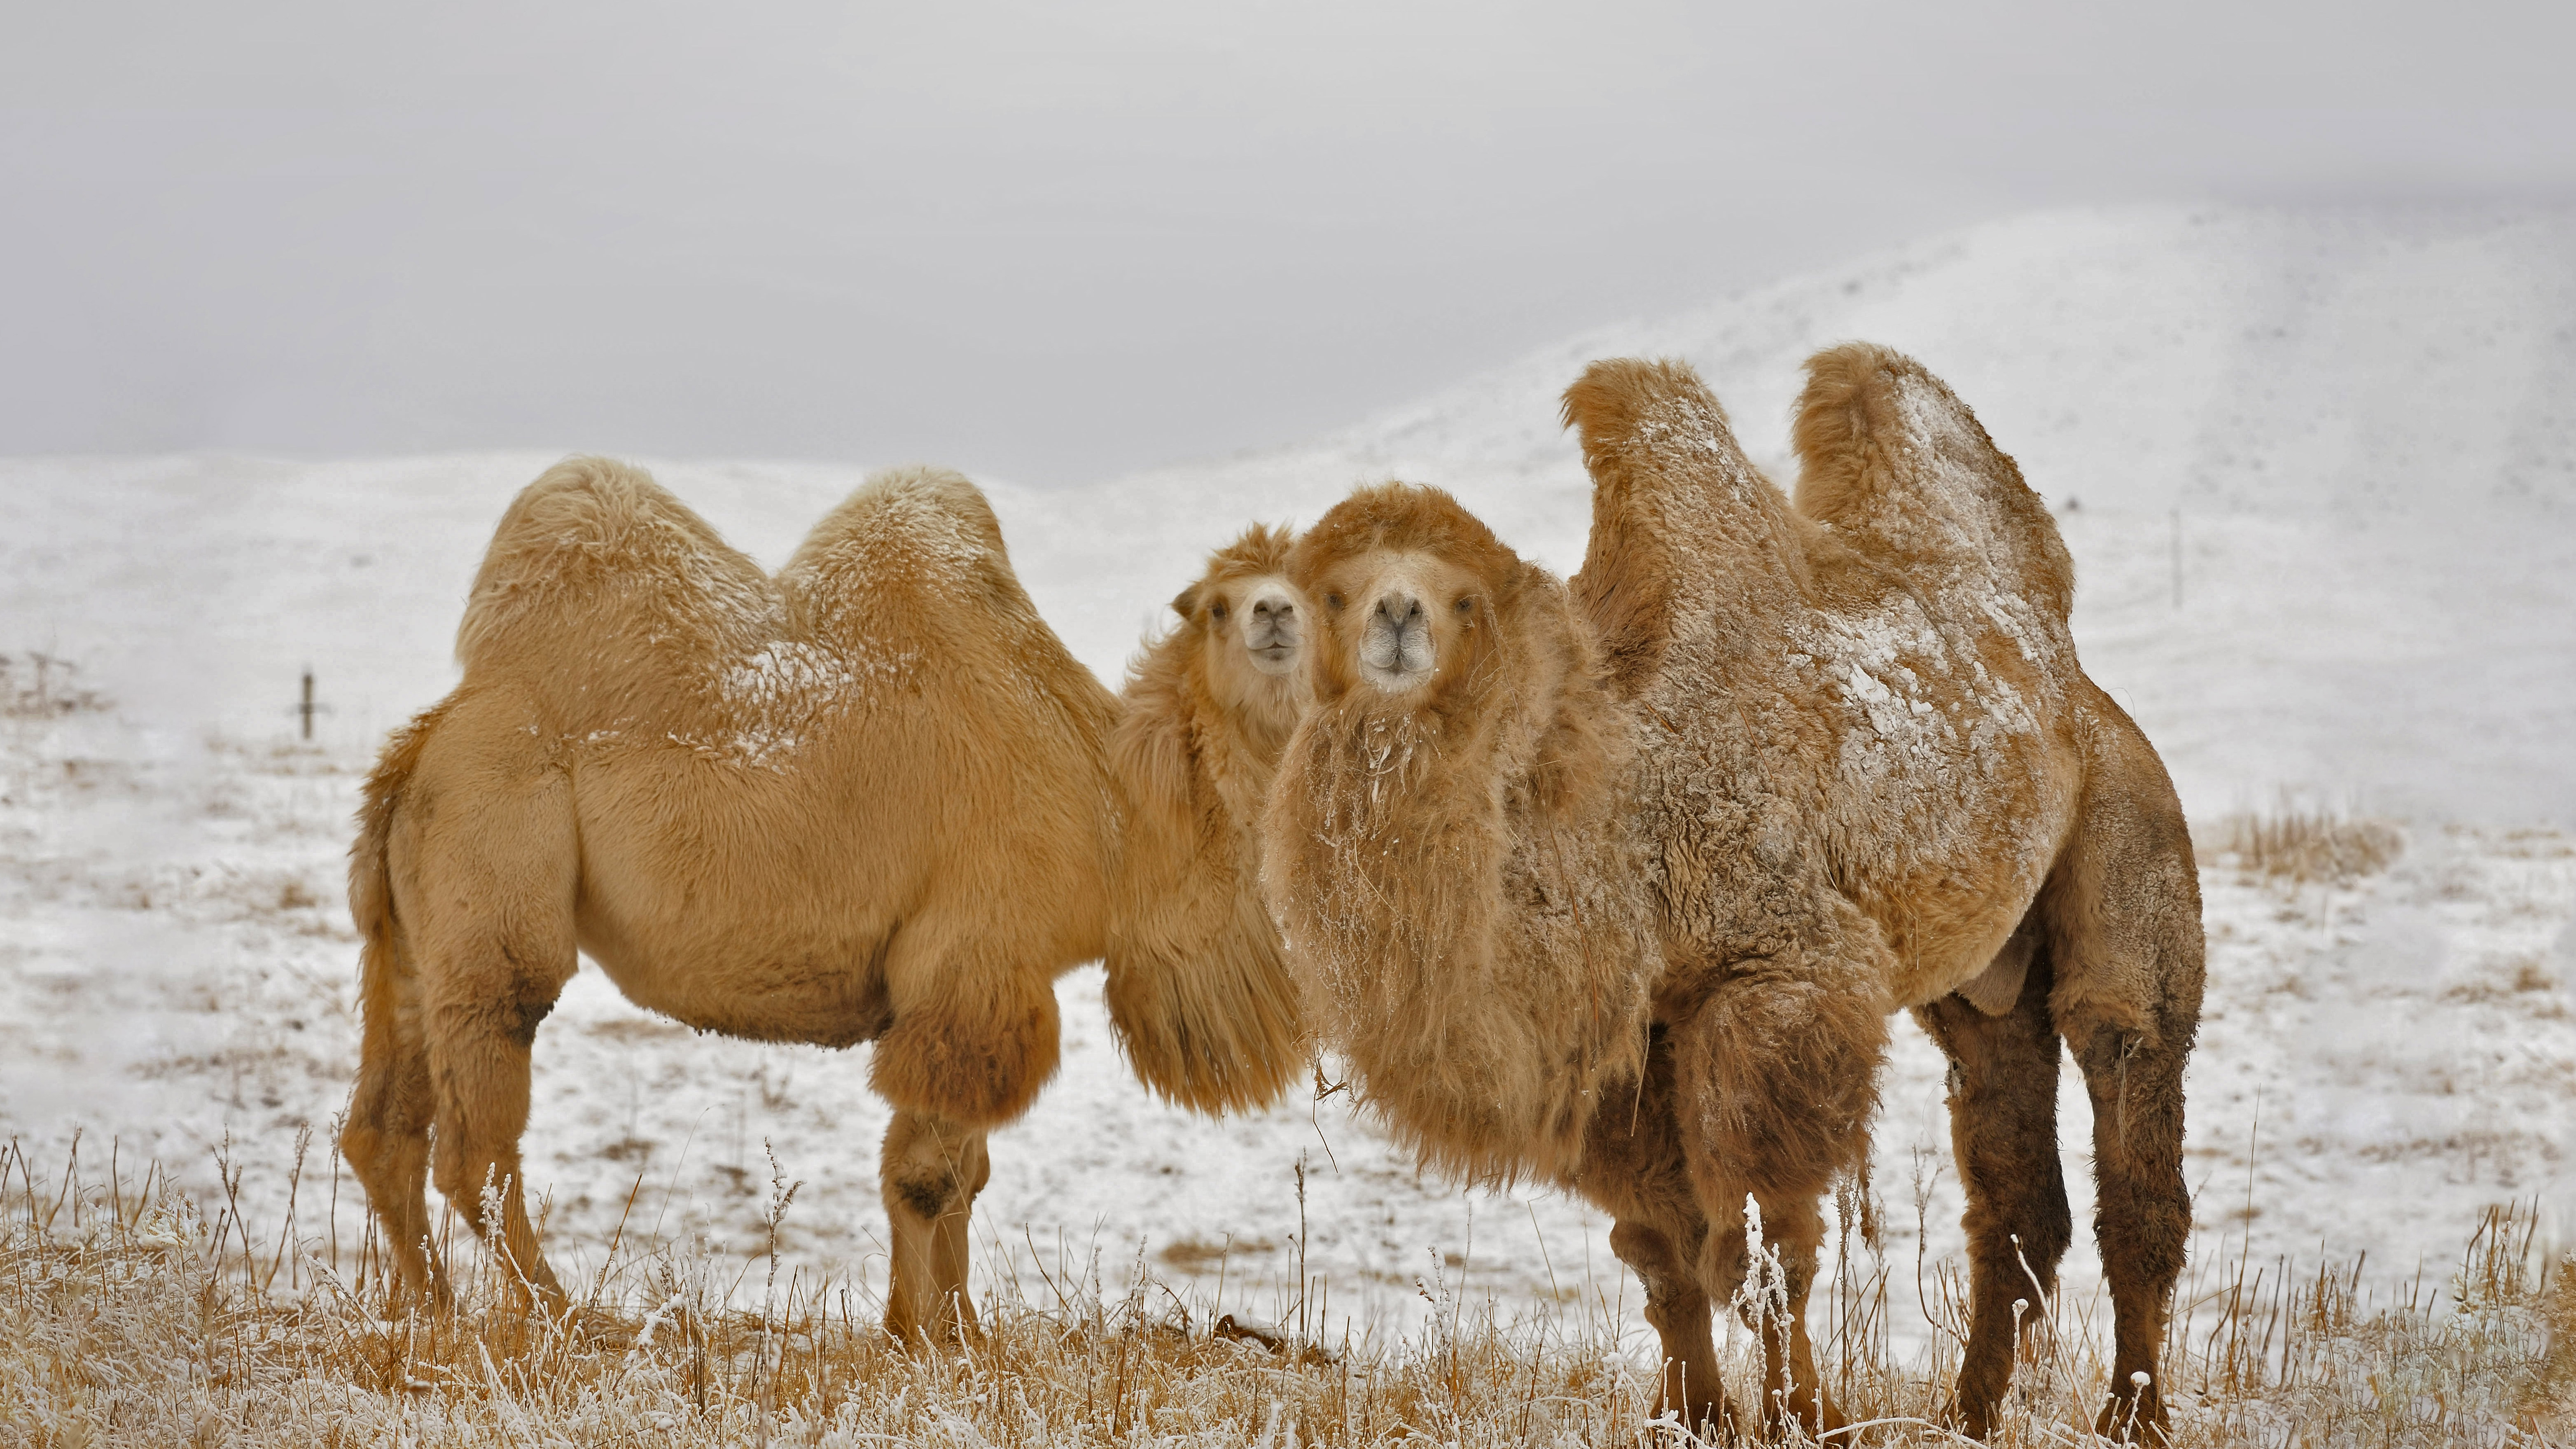 Two Bactrian camels in Kazakhstan by Nurlan Kulcha